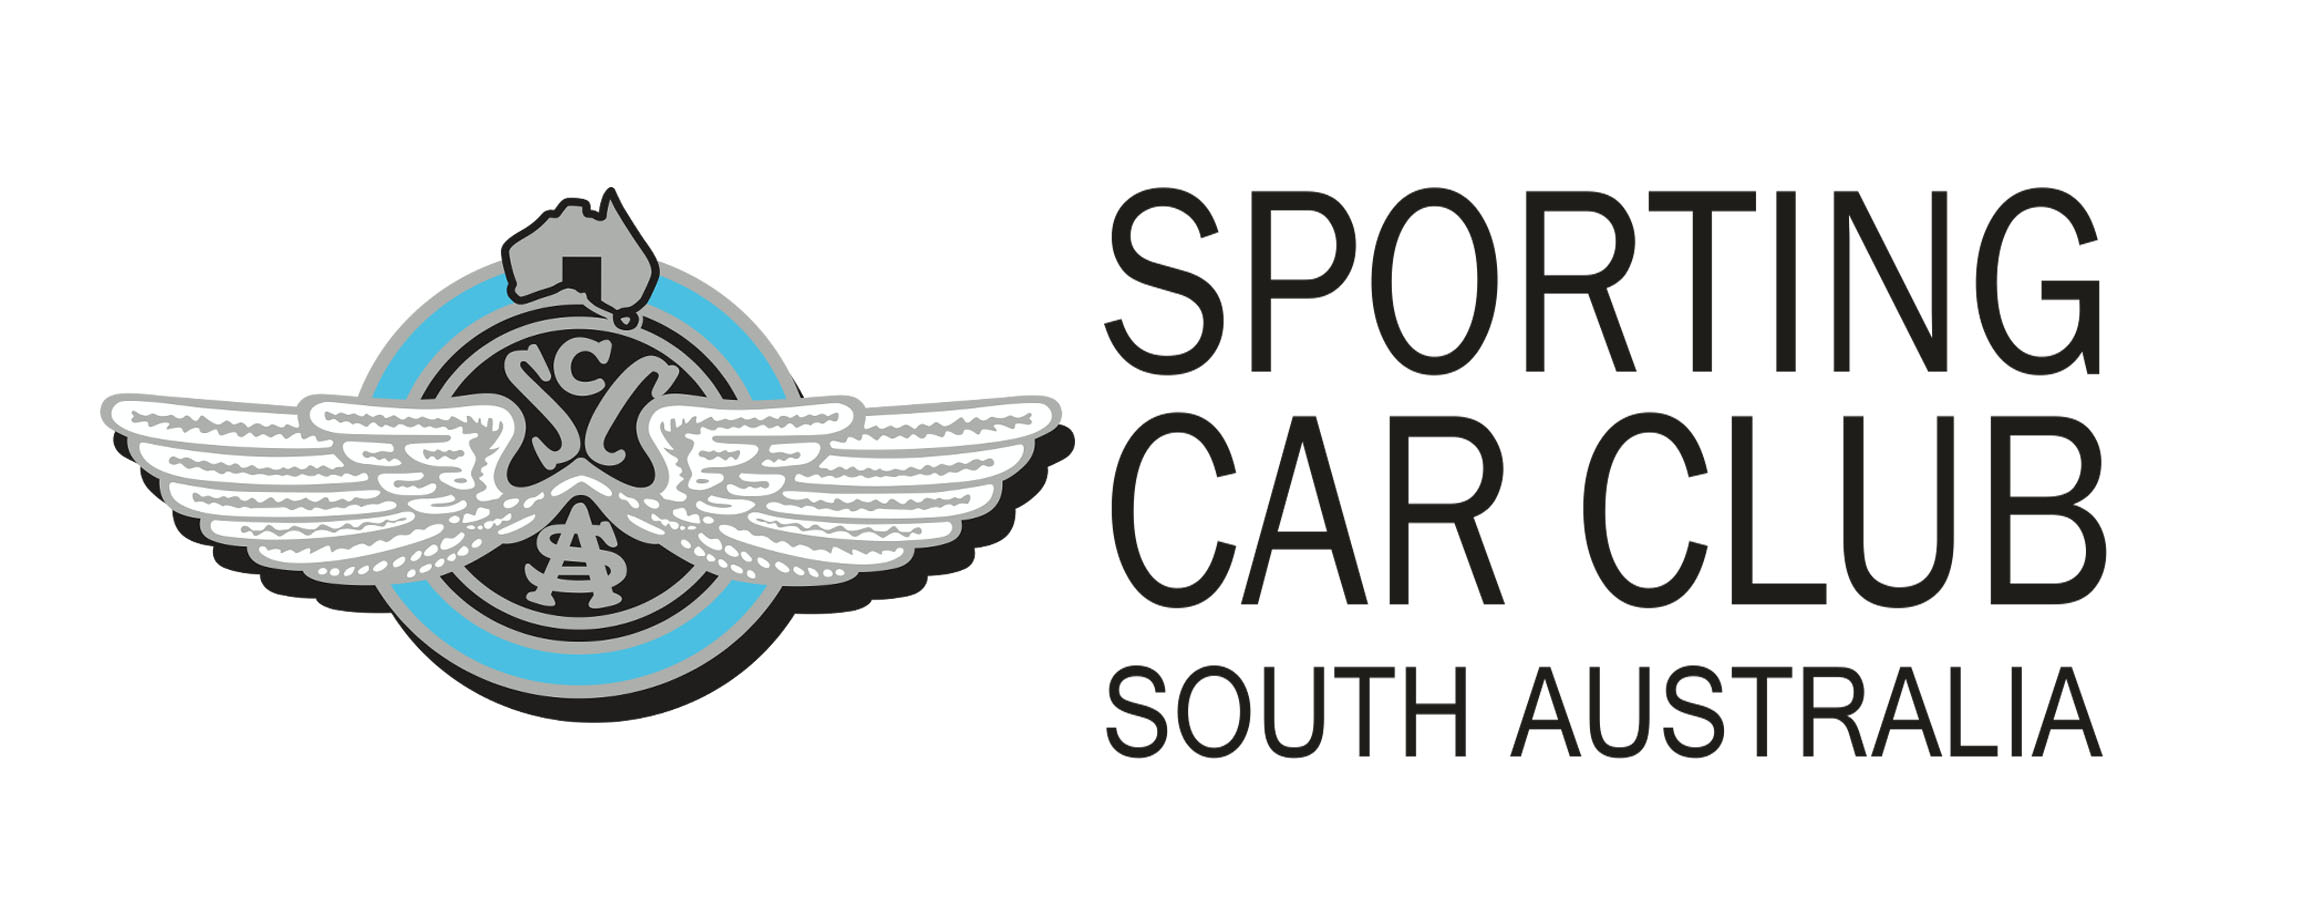 Sporting Car Club South Australia logo